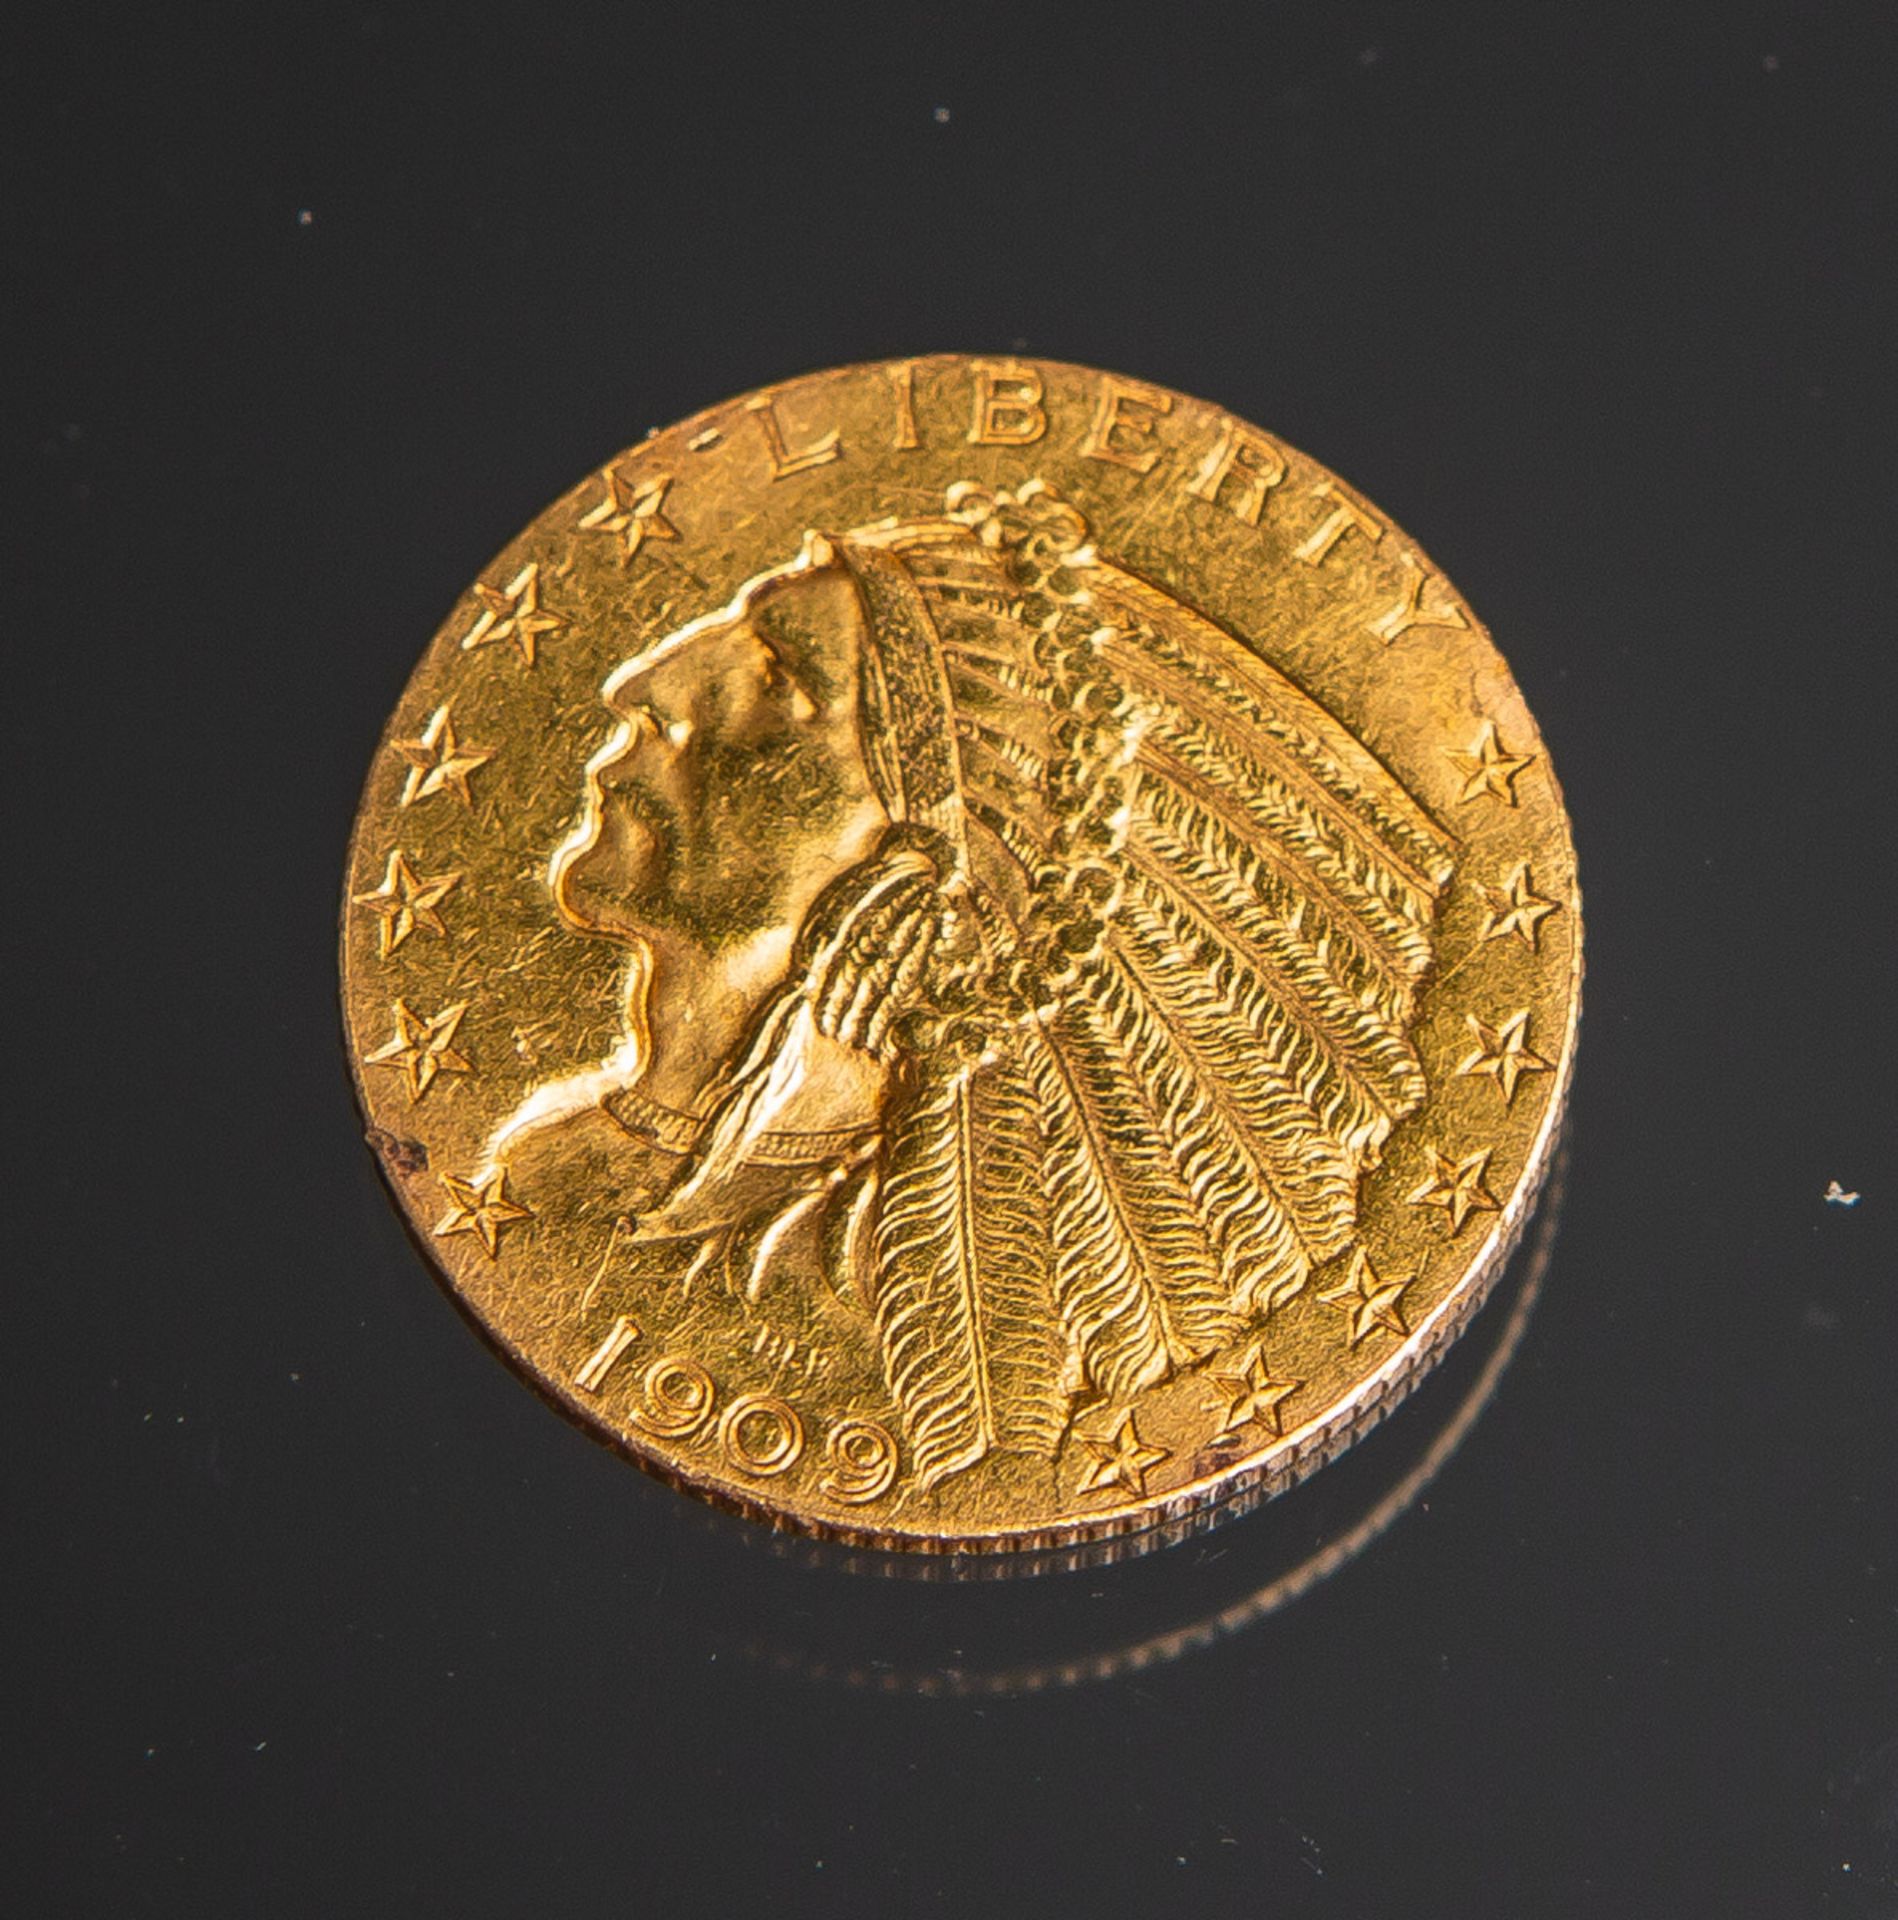 5-Dollar Goldmünze "Liberty" (United States of Amerika, 1909)